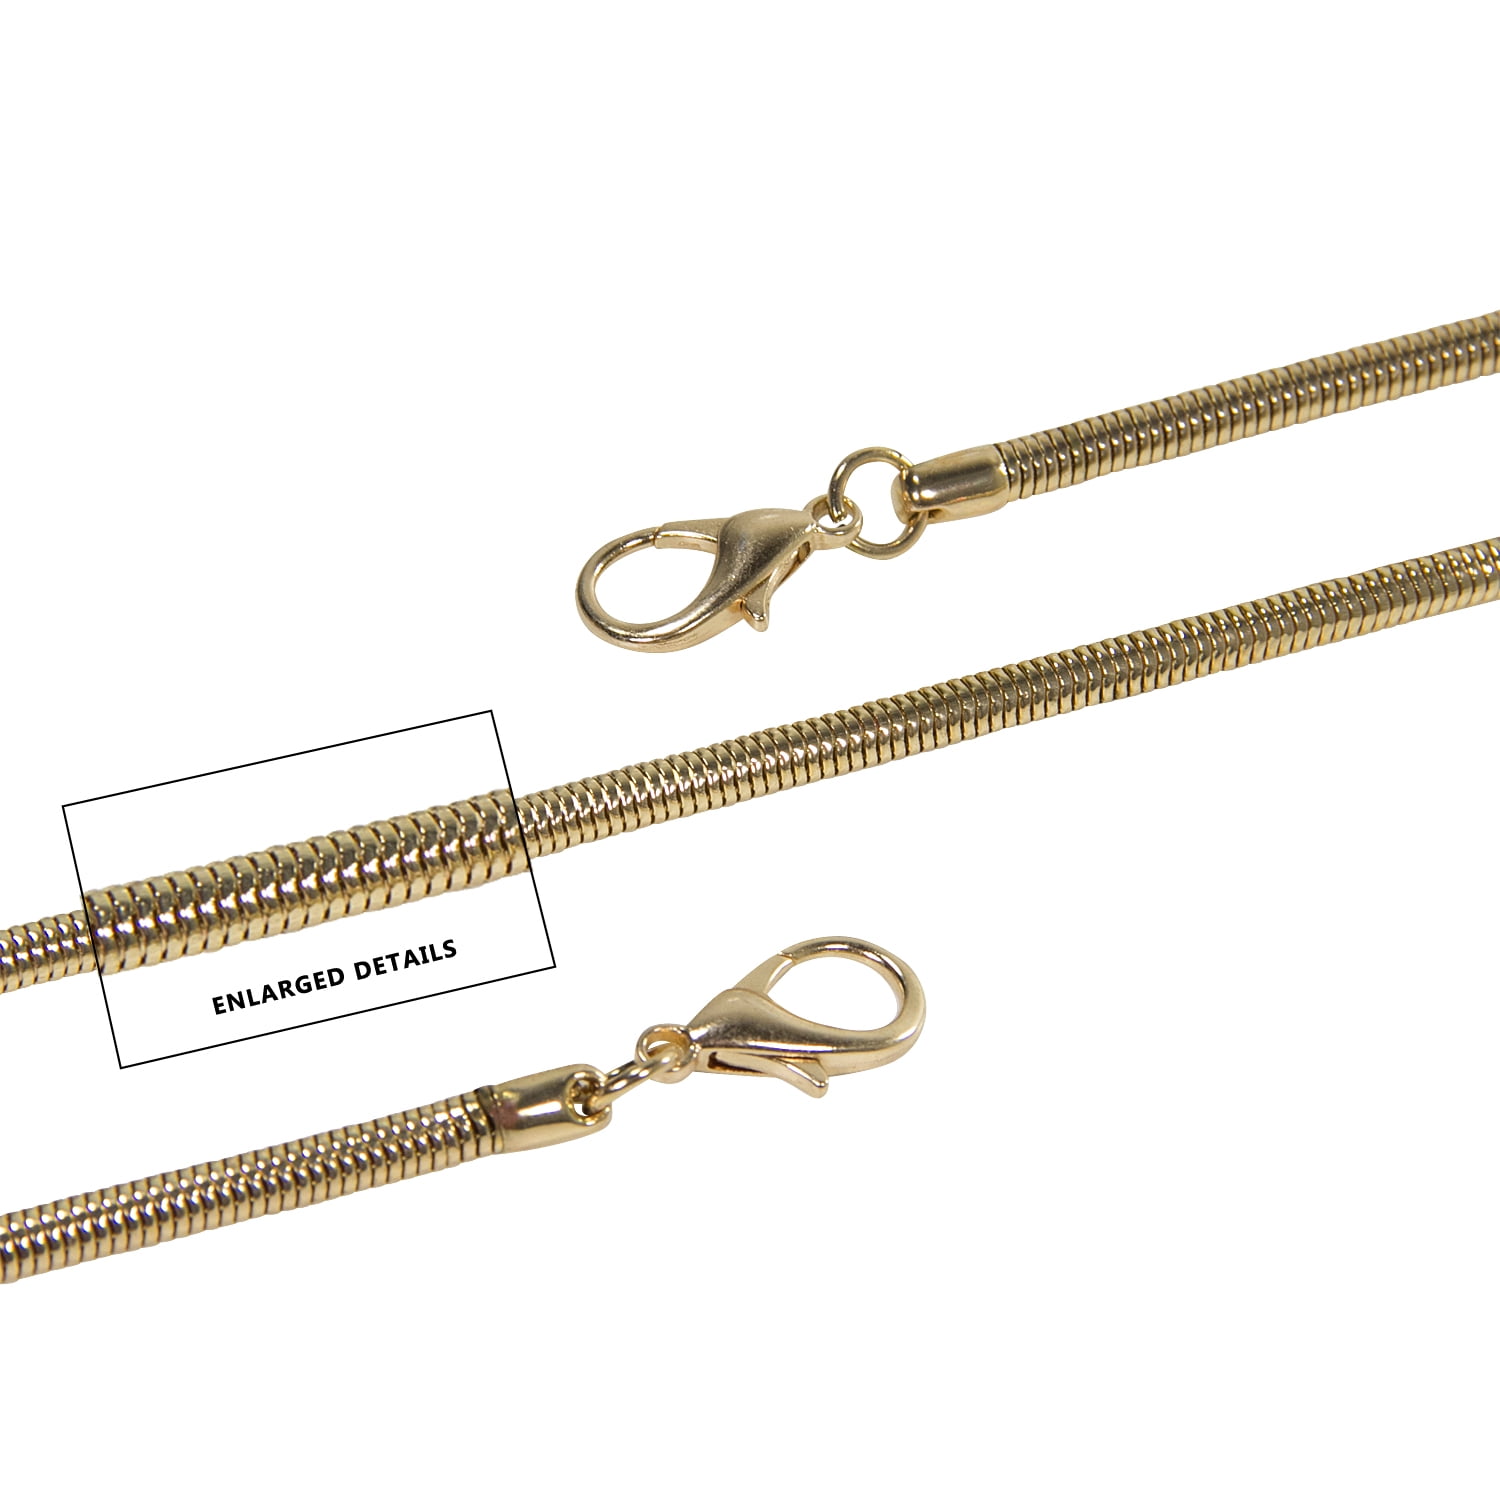 Soft Gold Tone Chain Strap Replacement for Pochette 